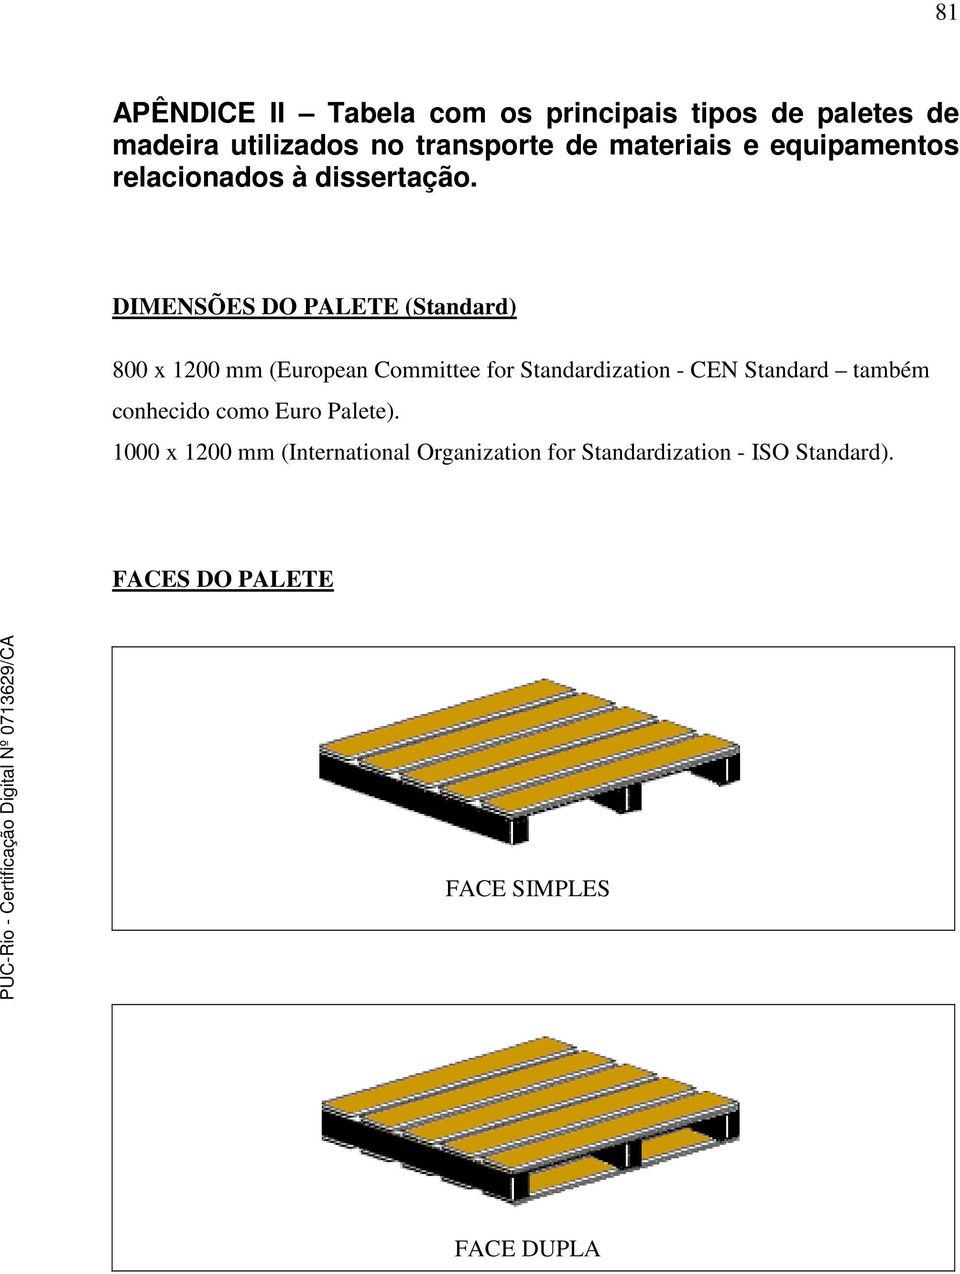 DIMENSÕES DO PALETE (Standard) 800 x 1200 mm (European Committee for Standardization - CEN Standard